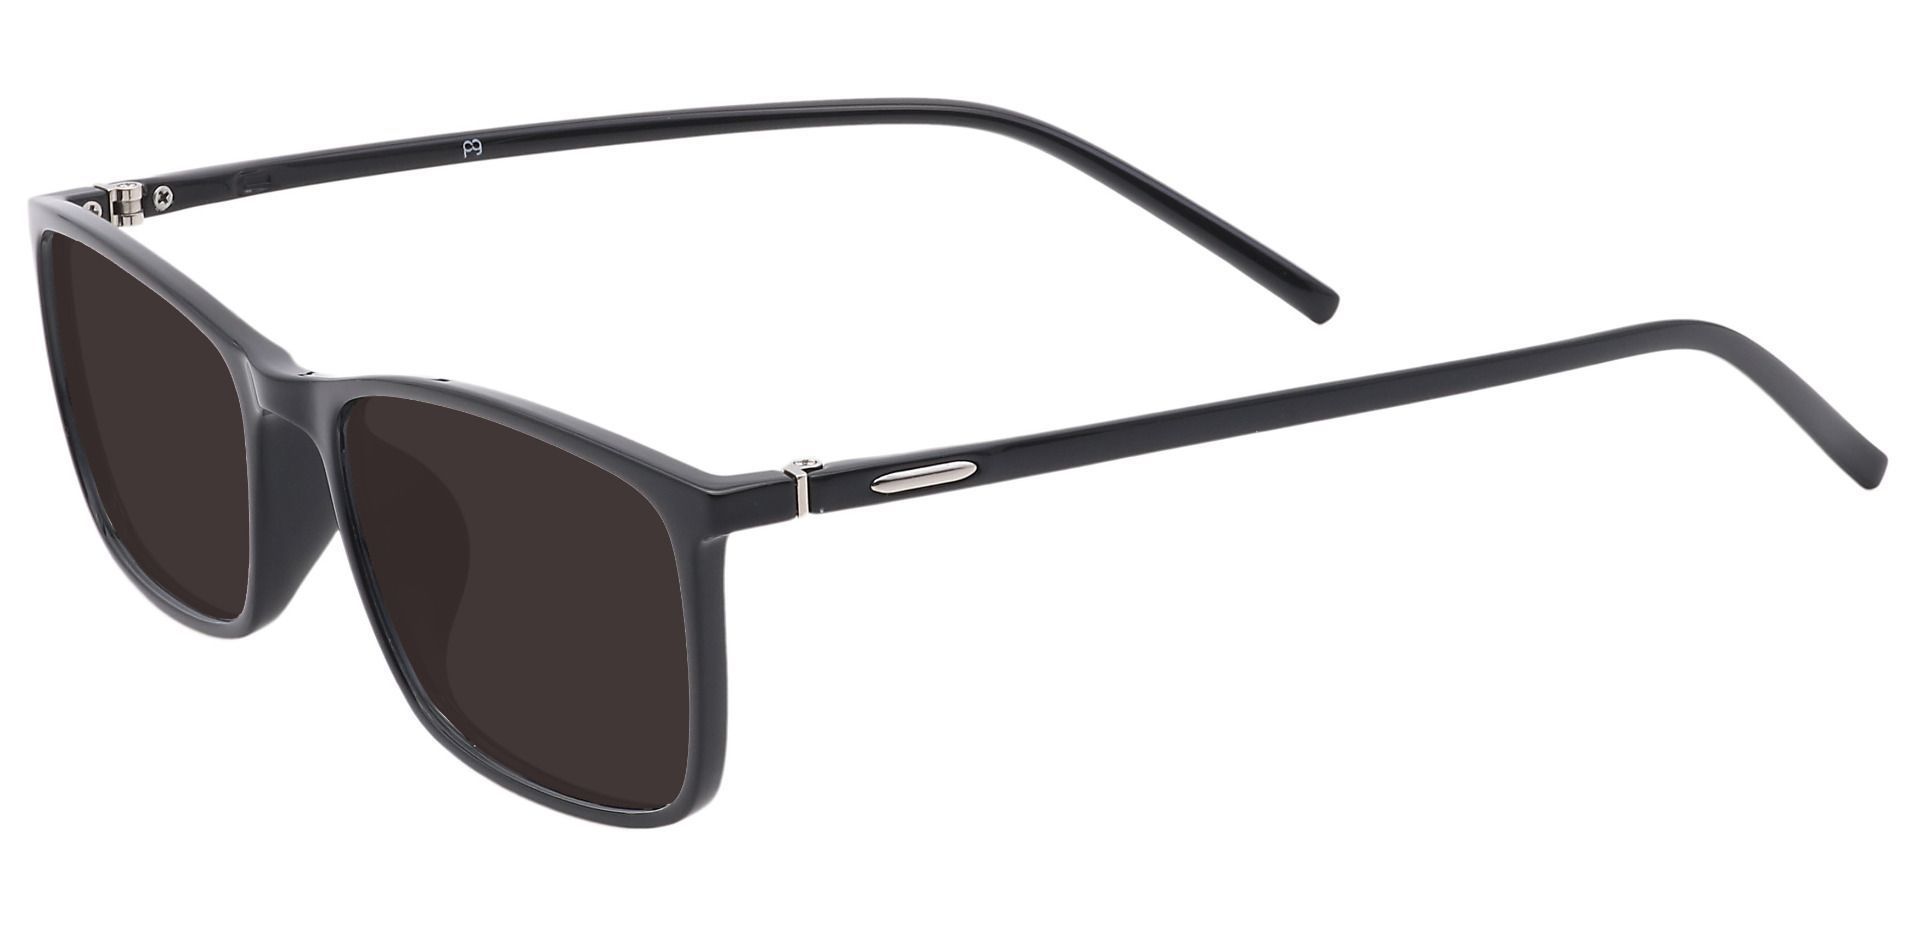 Fuji Rectangle Reading Sunglasses - Black Frame With Gray Lenses